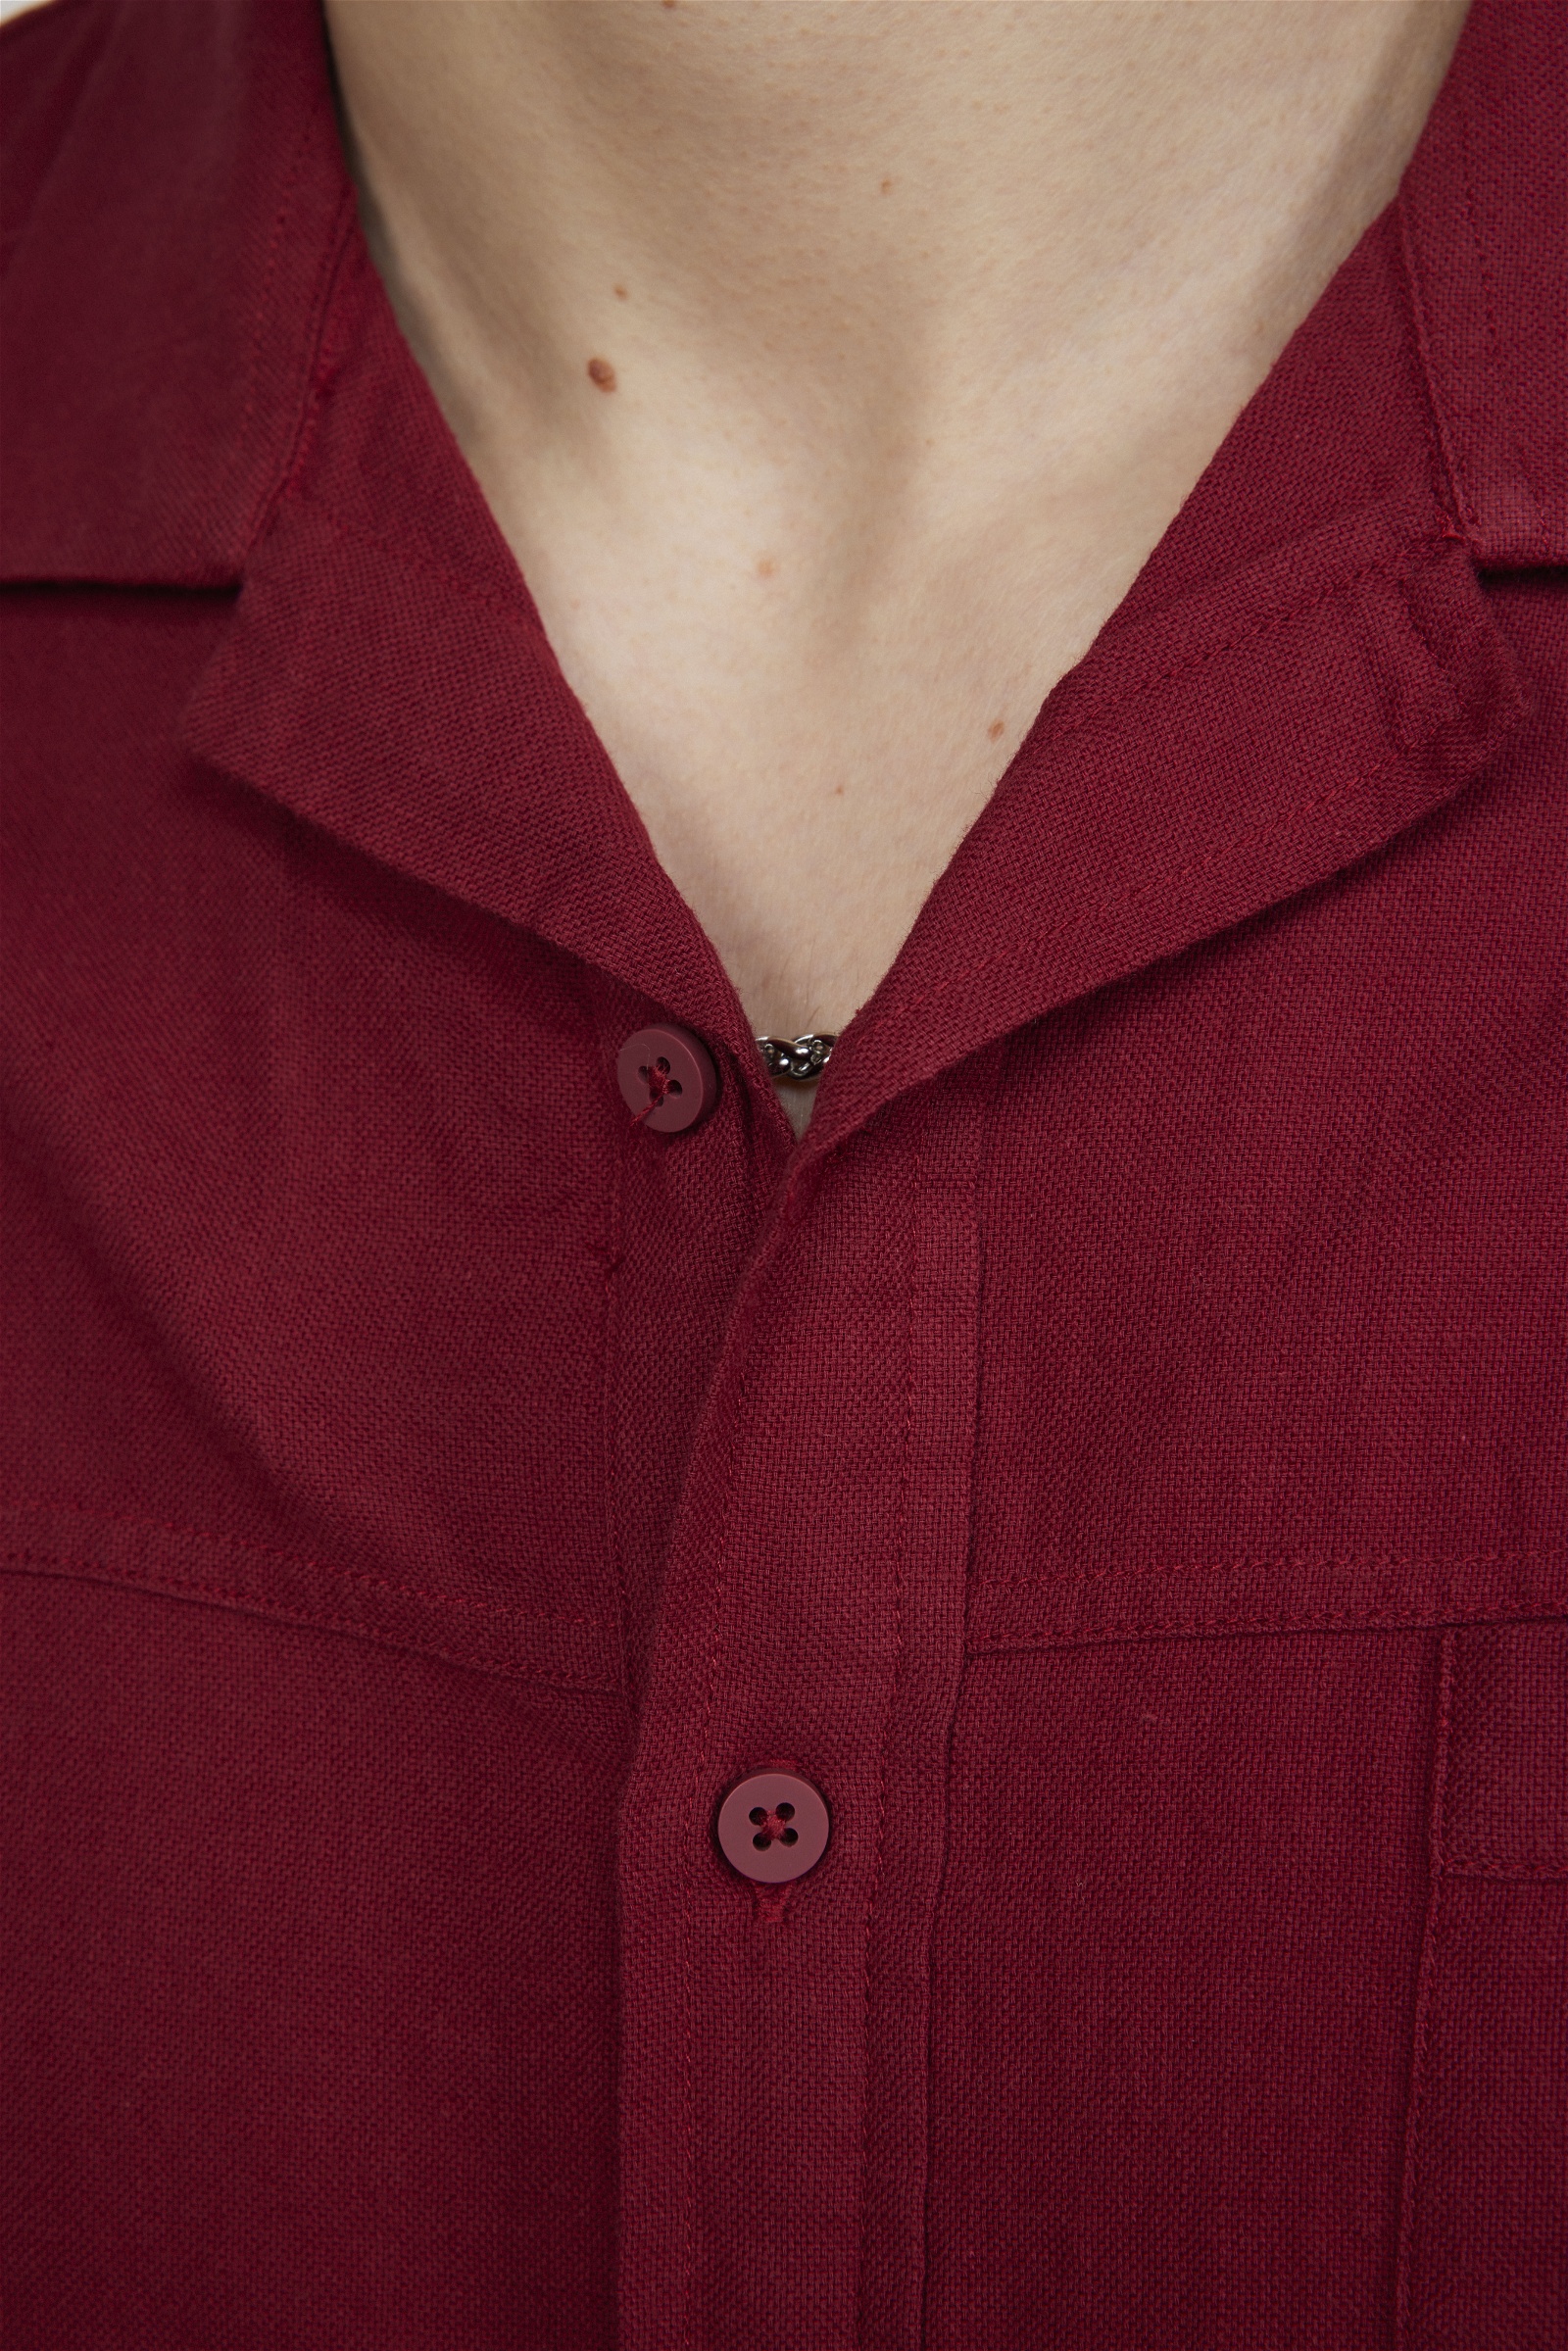 Plain Claret Red Shirt